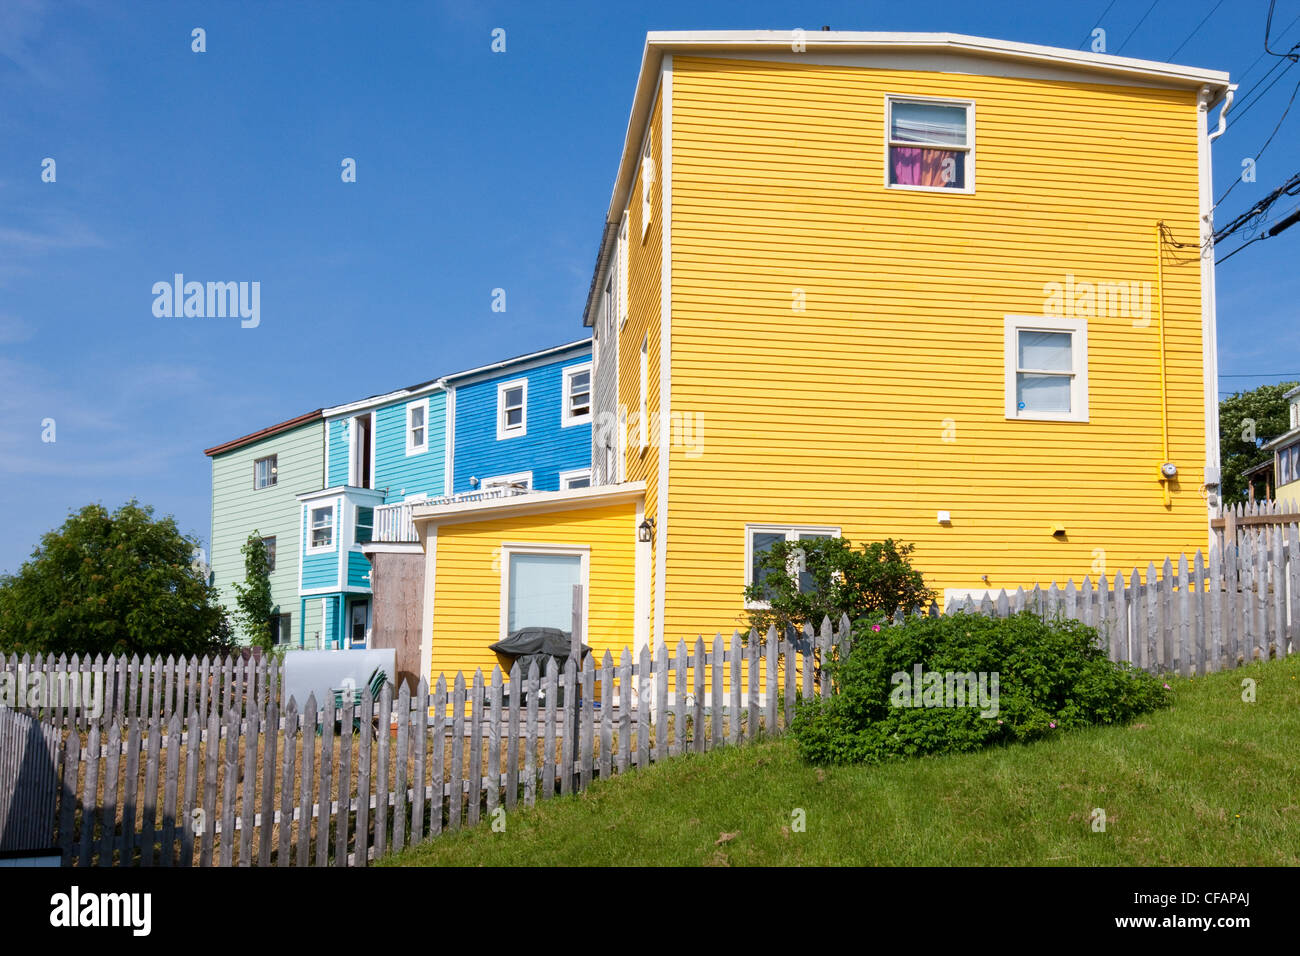 Row Houses in St. John's, Newfoundland and Labrador, Canada. Stock Photo